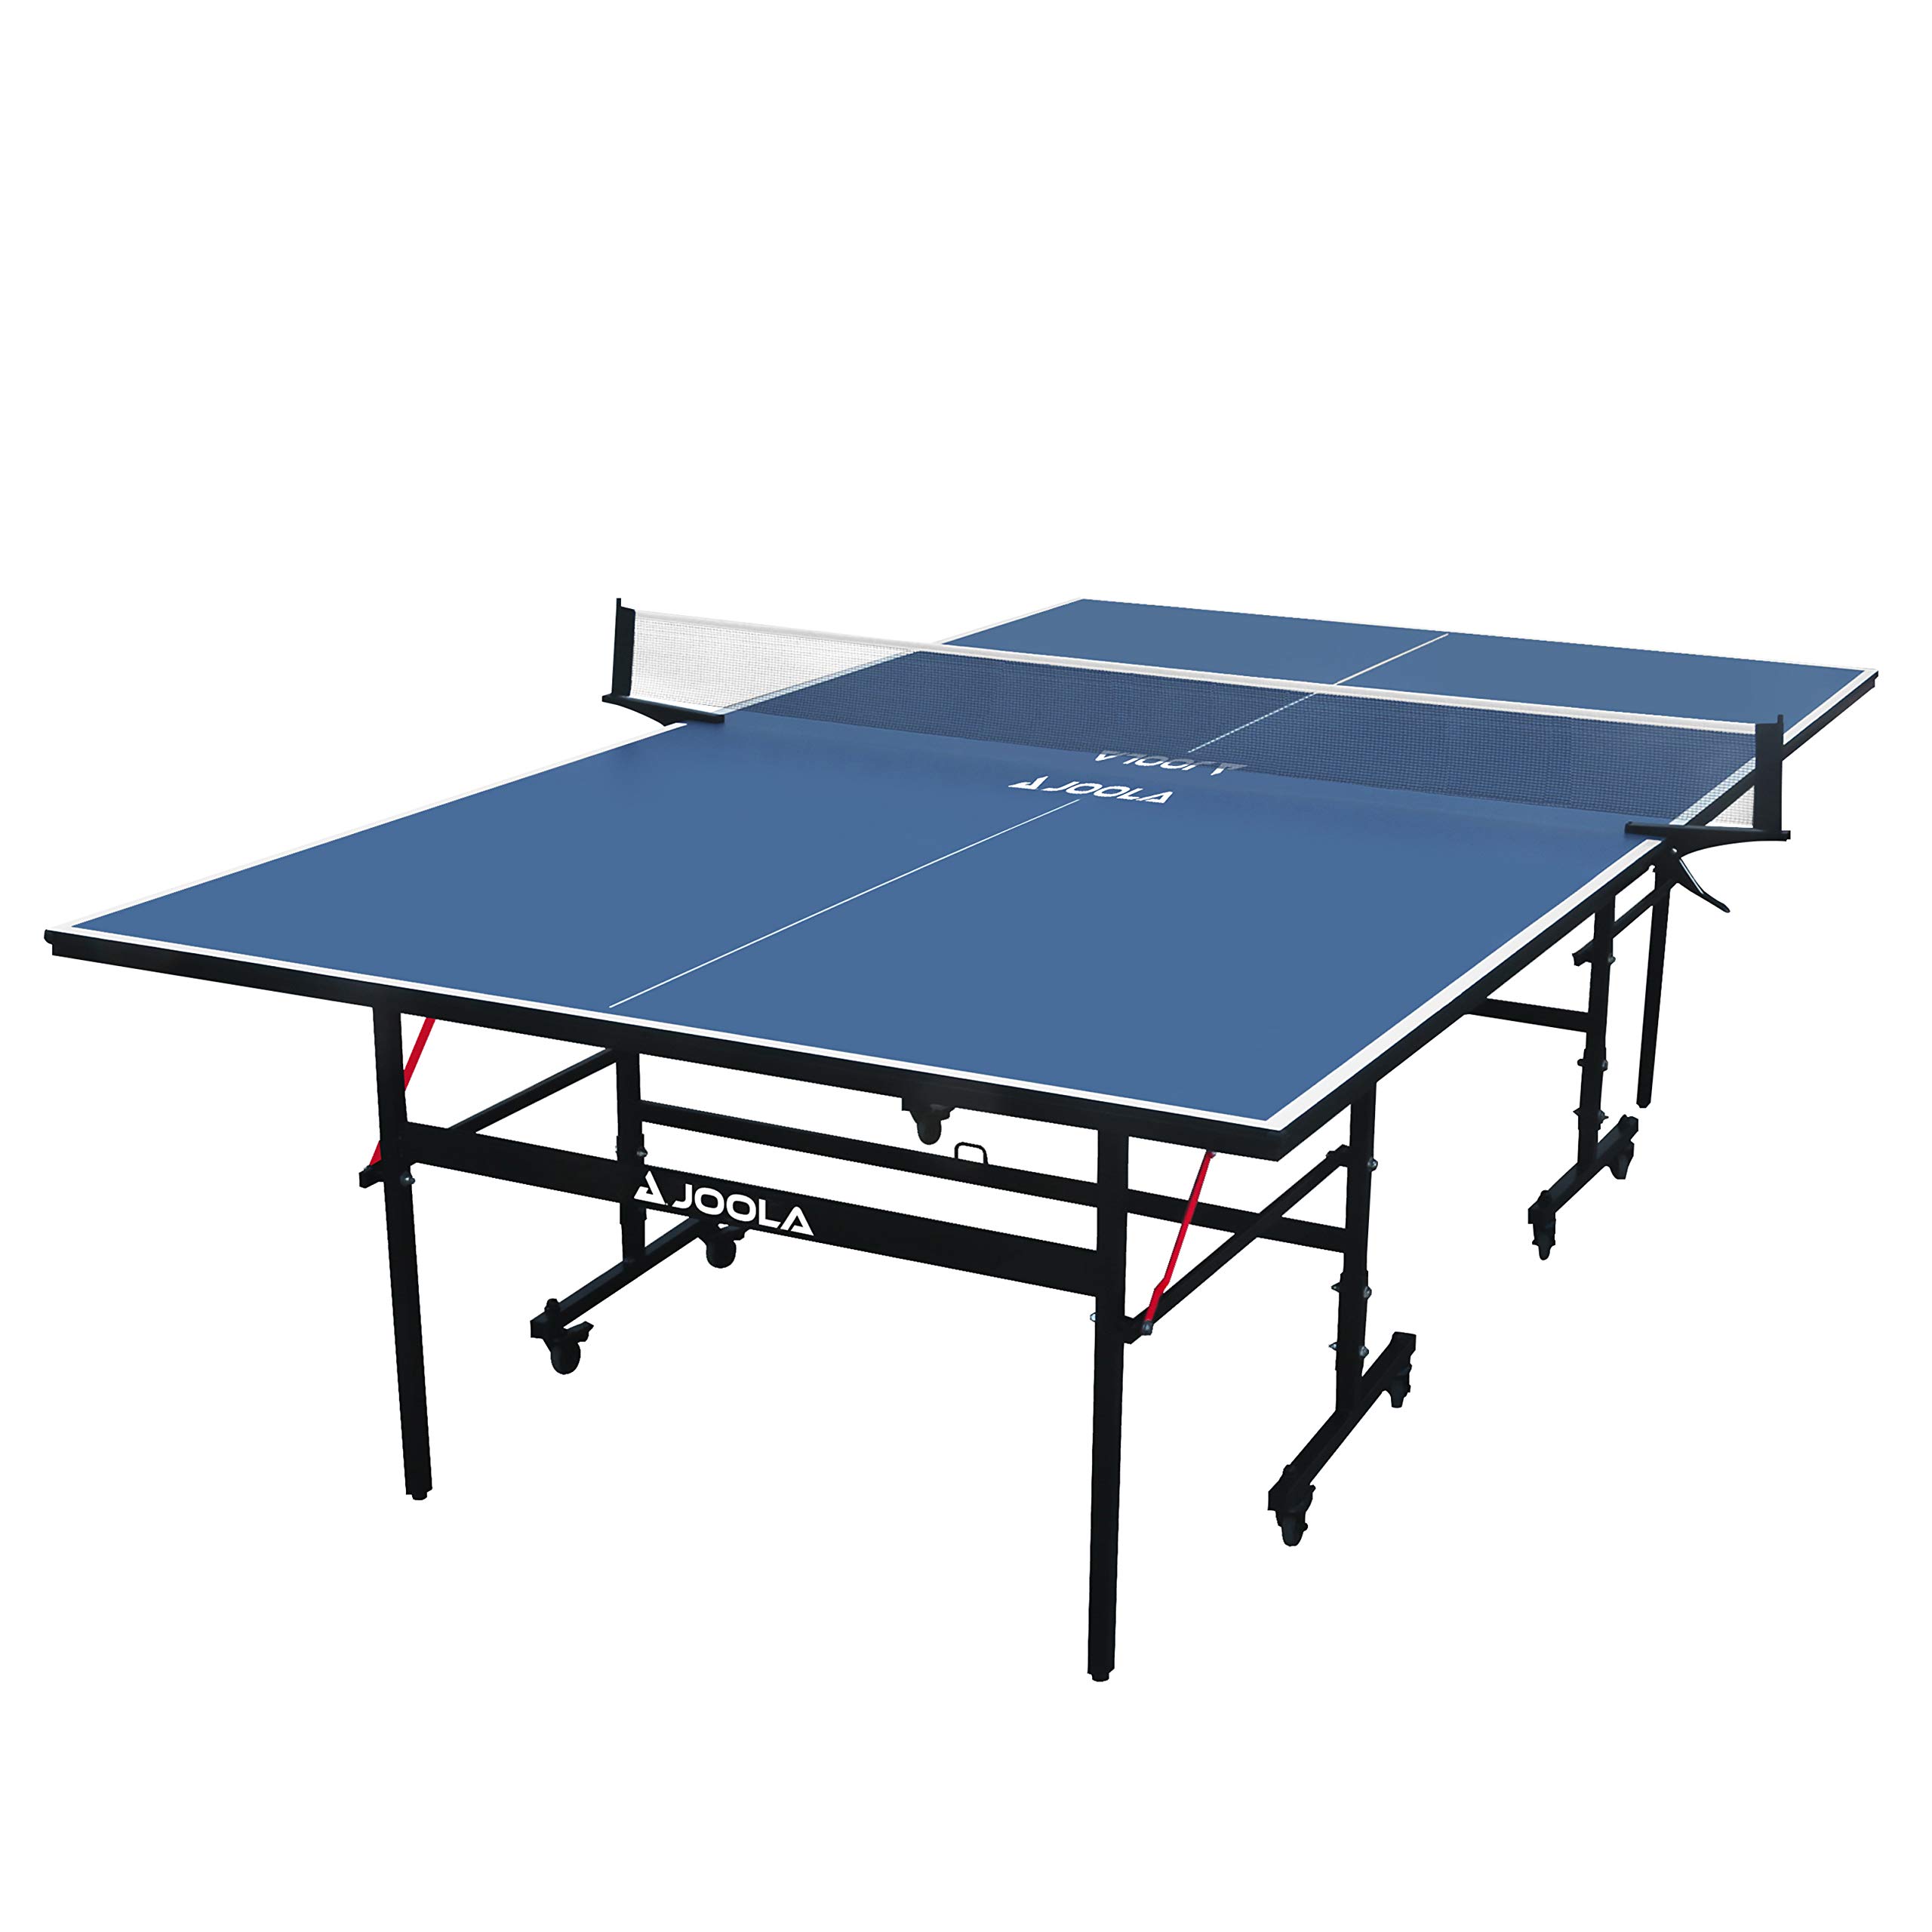  JOOLA Interior - Mesa de tenis de mesa profesional de MDF para interiores con red de ping pong de abrazadera rápida y juego de postes - Montaje fácil de 10 minutos - Mesa de ping pong con modo de...